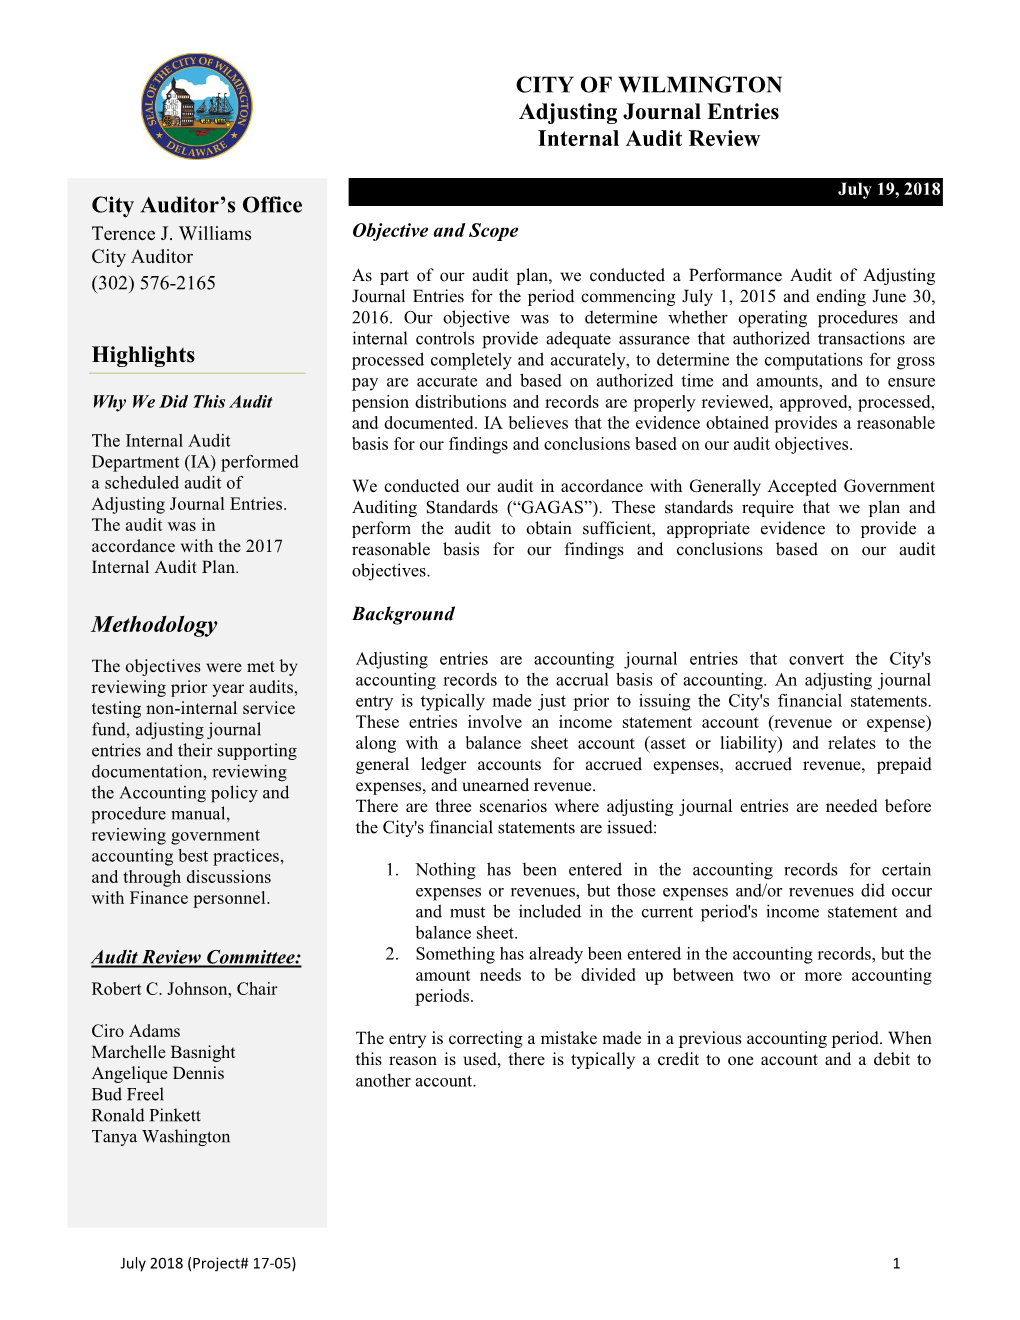 Performance Audit Report of Adjusting Journal Entries